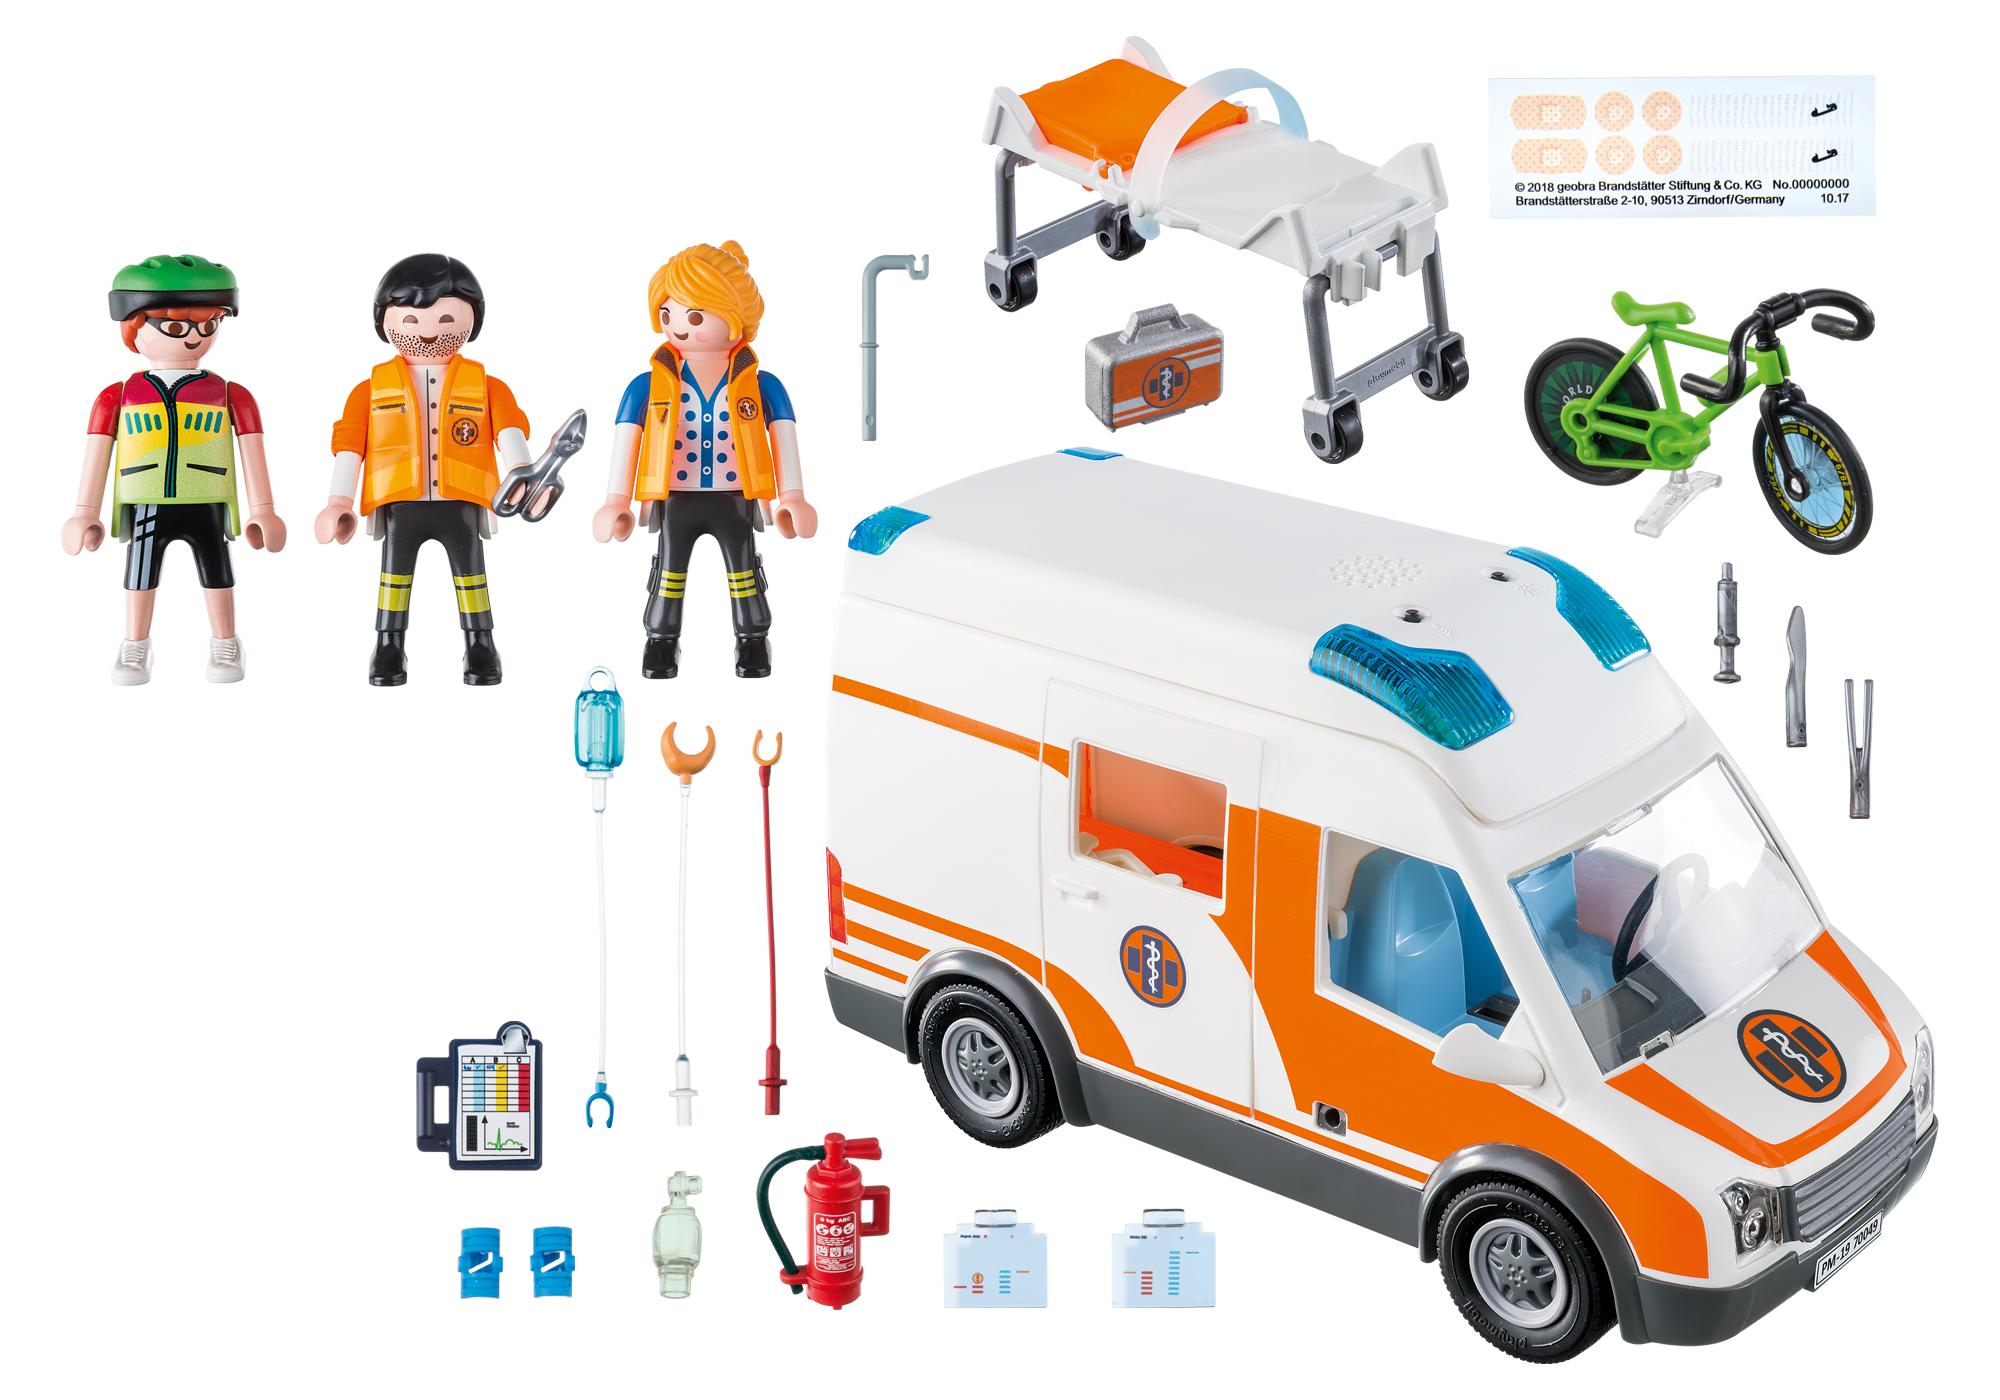 ambulances playmobil